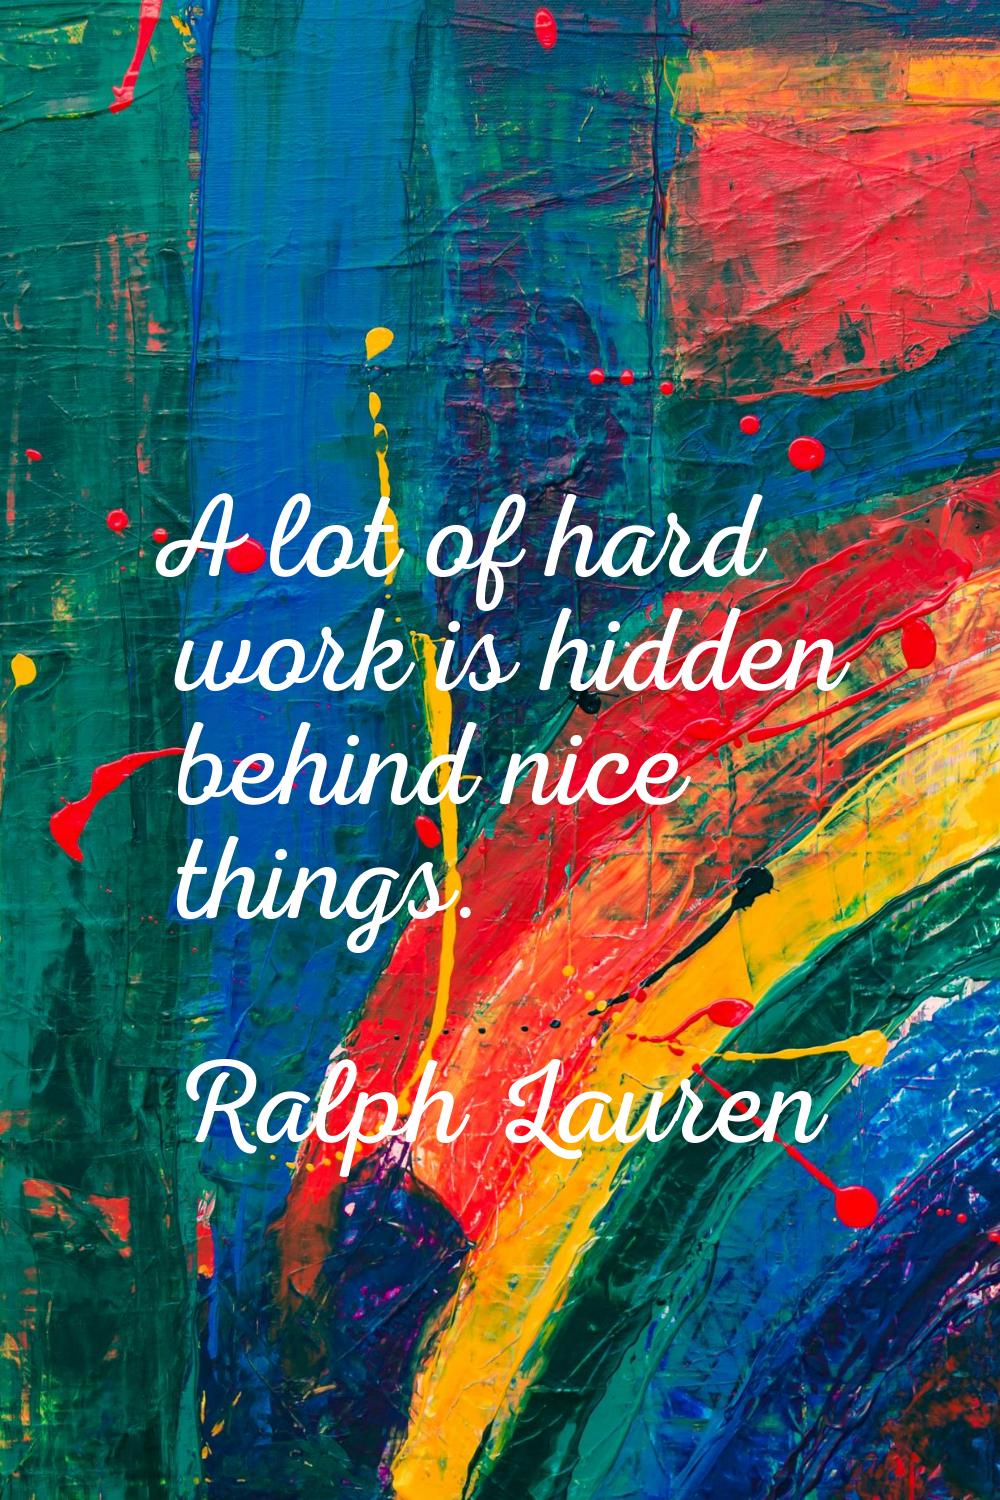 A lot of hard work is hidden behind nice things.